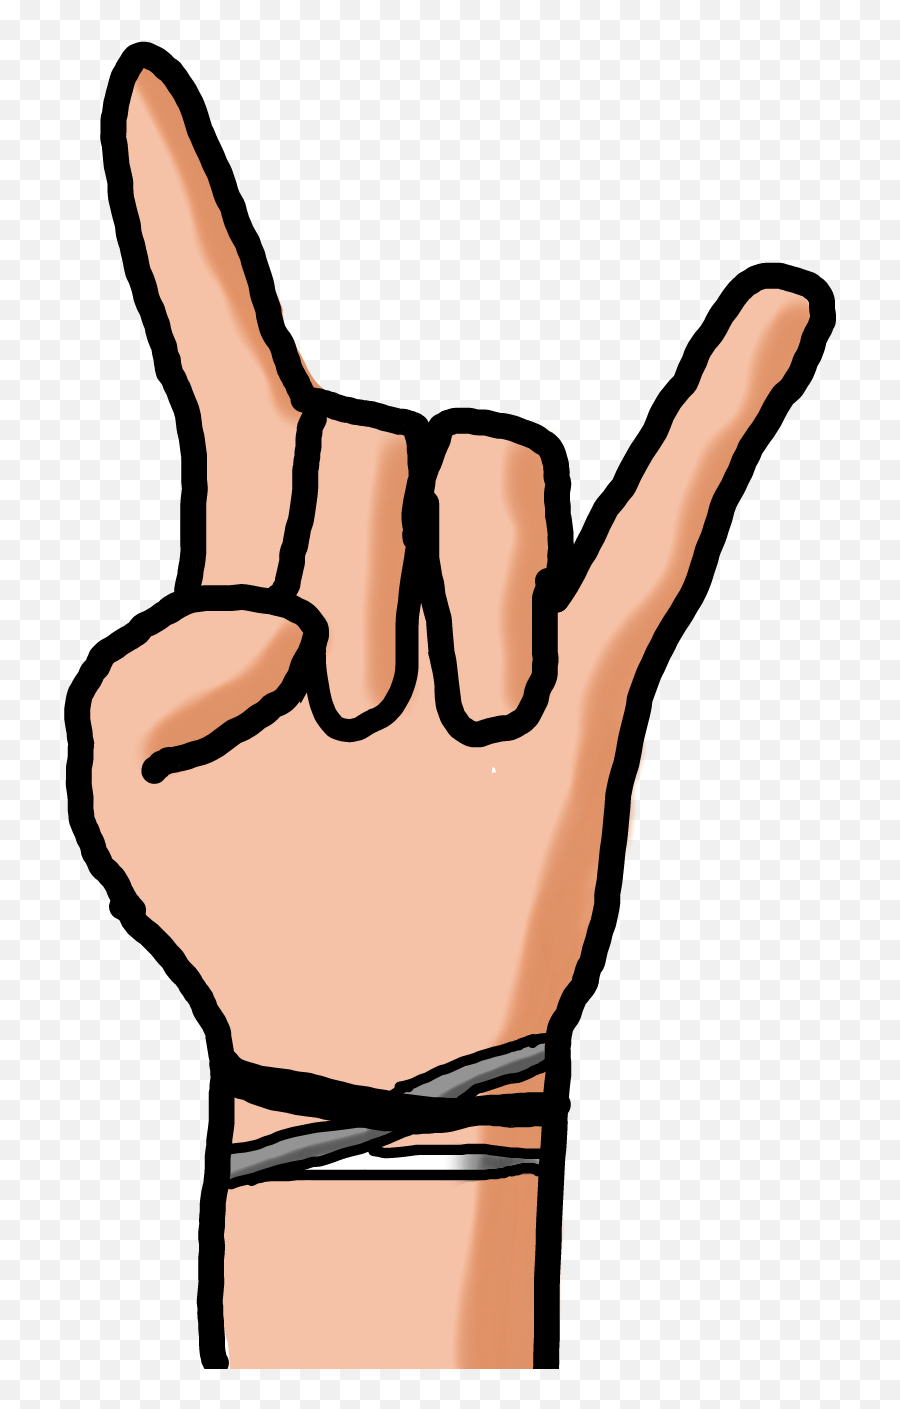 Rockhandstar - Illustration Emoji,Rock On Hand Emoji